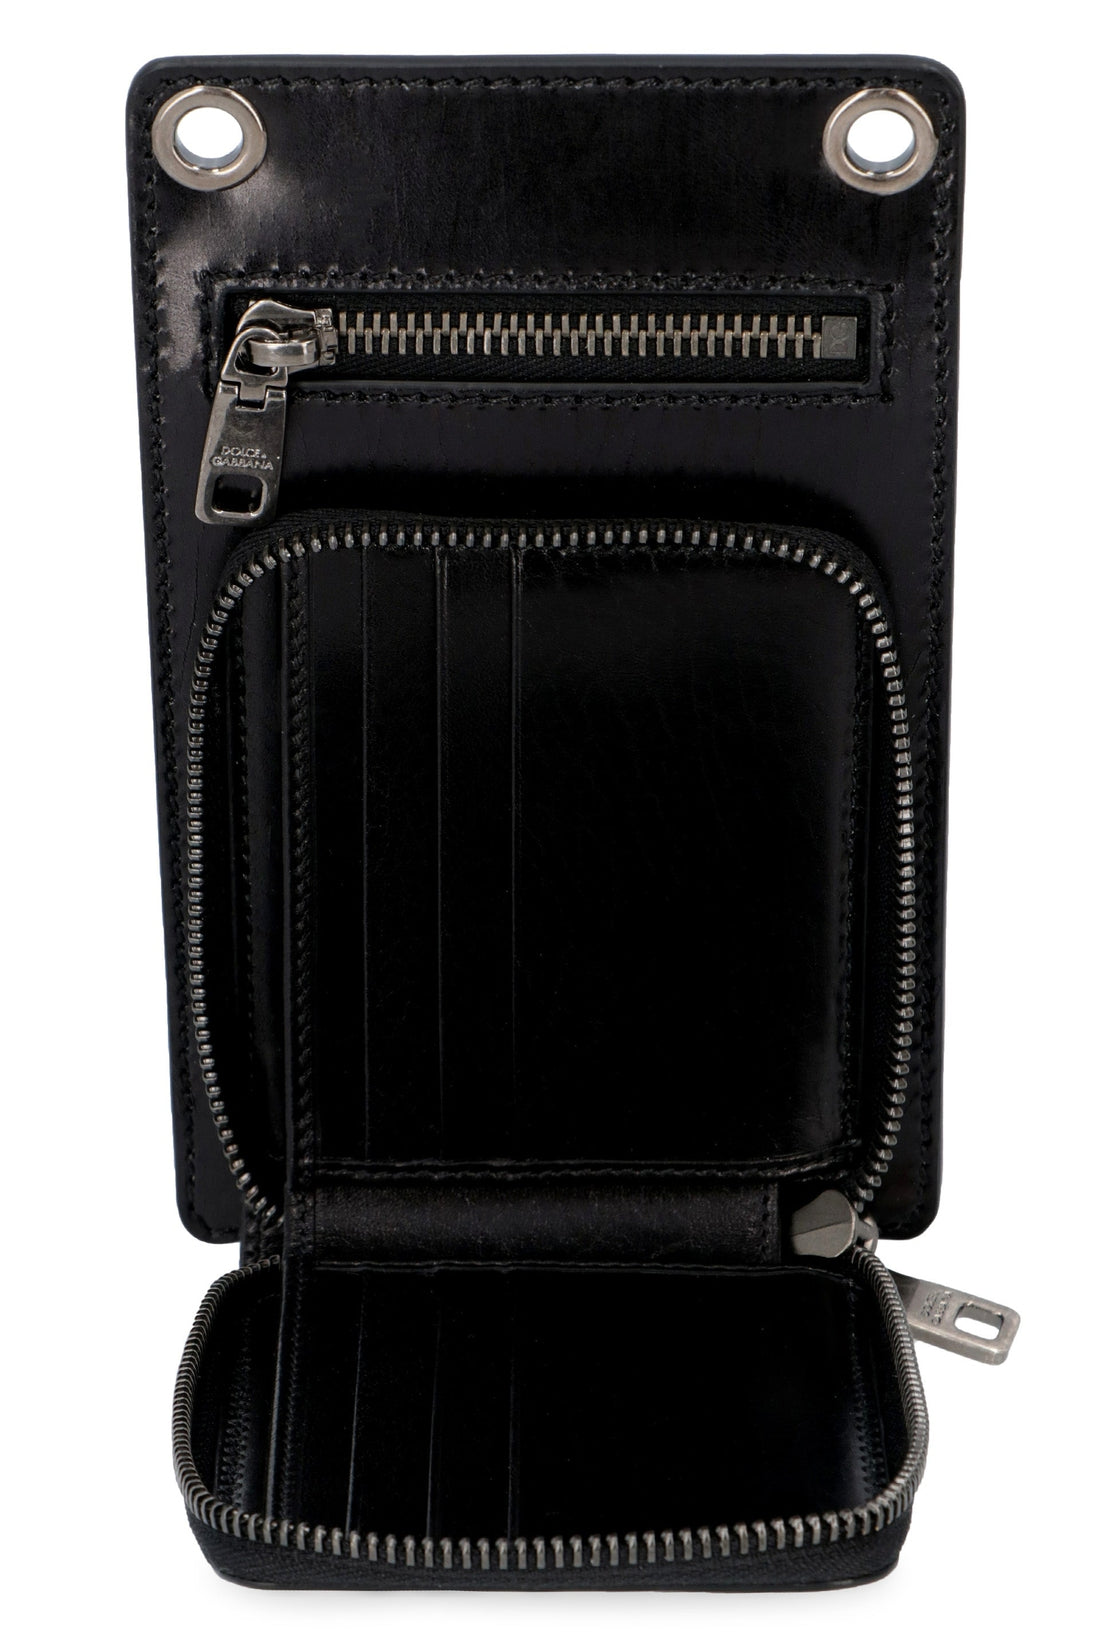 Dolce & Gabbana-OUTLET-SALE-Leather phone-bag-ARCHIVIST